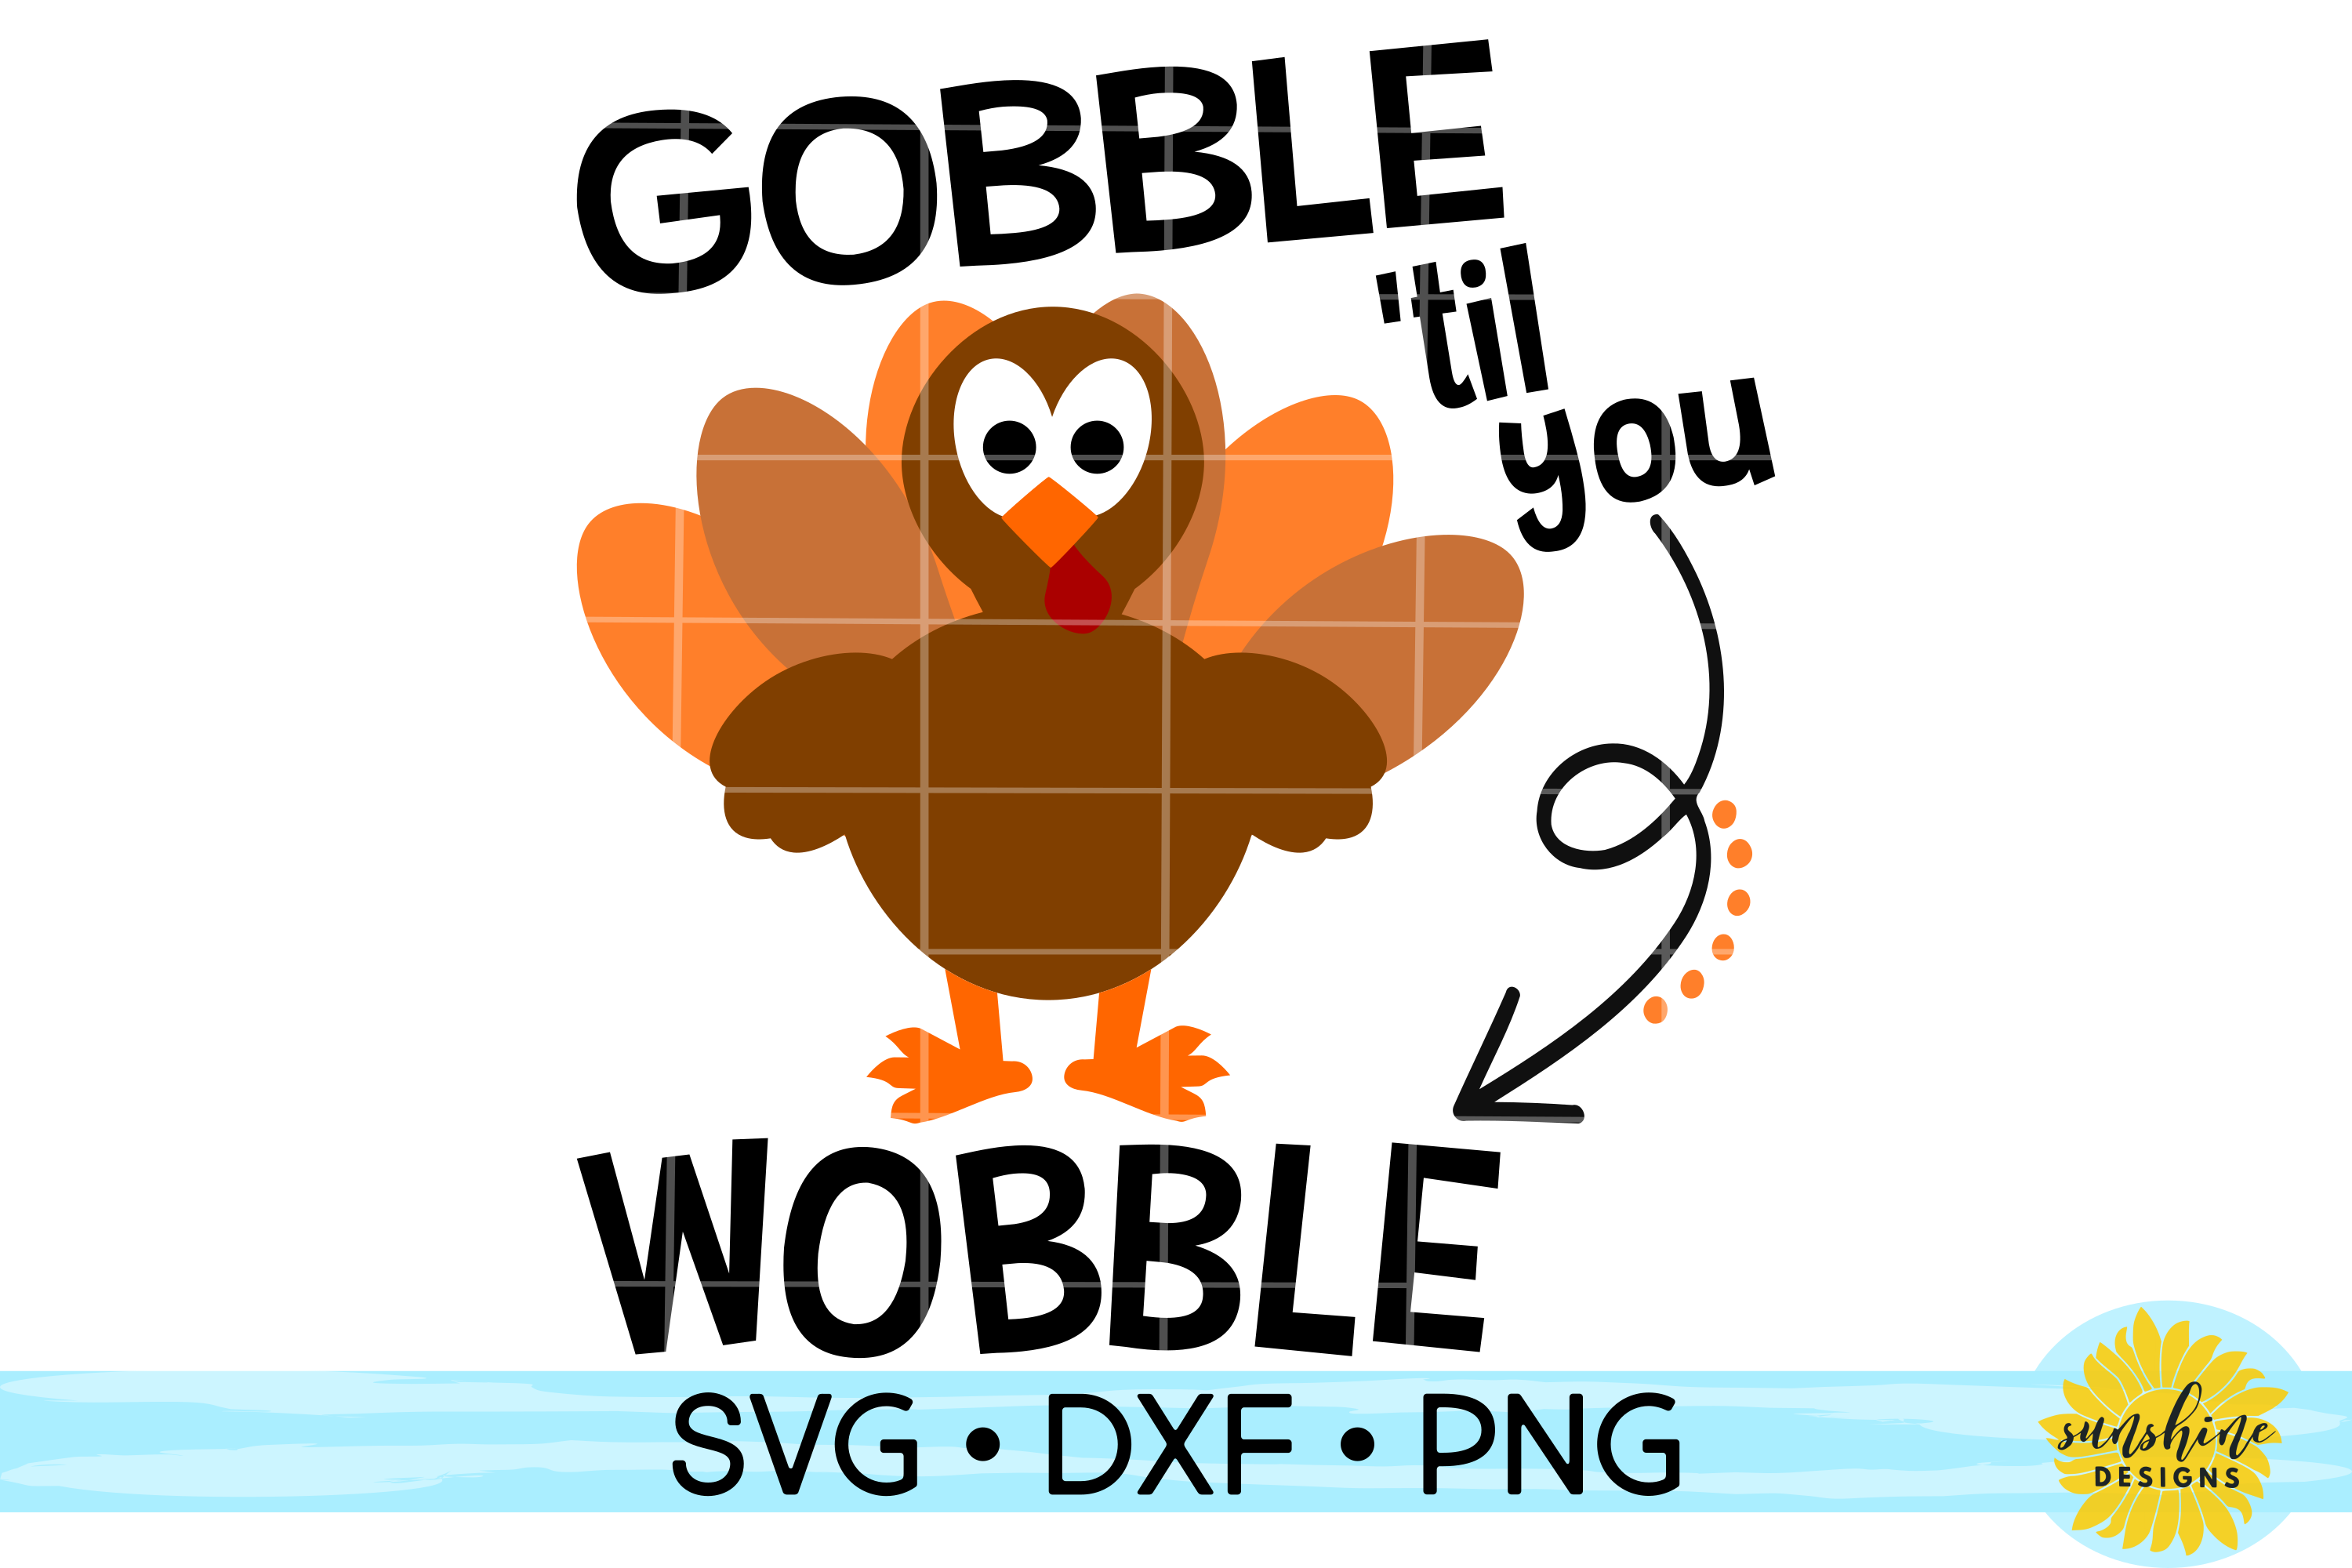 GOBBLE TIL YOU WOBBLE SVG DXF PNG| Thanksgiving